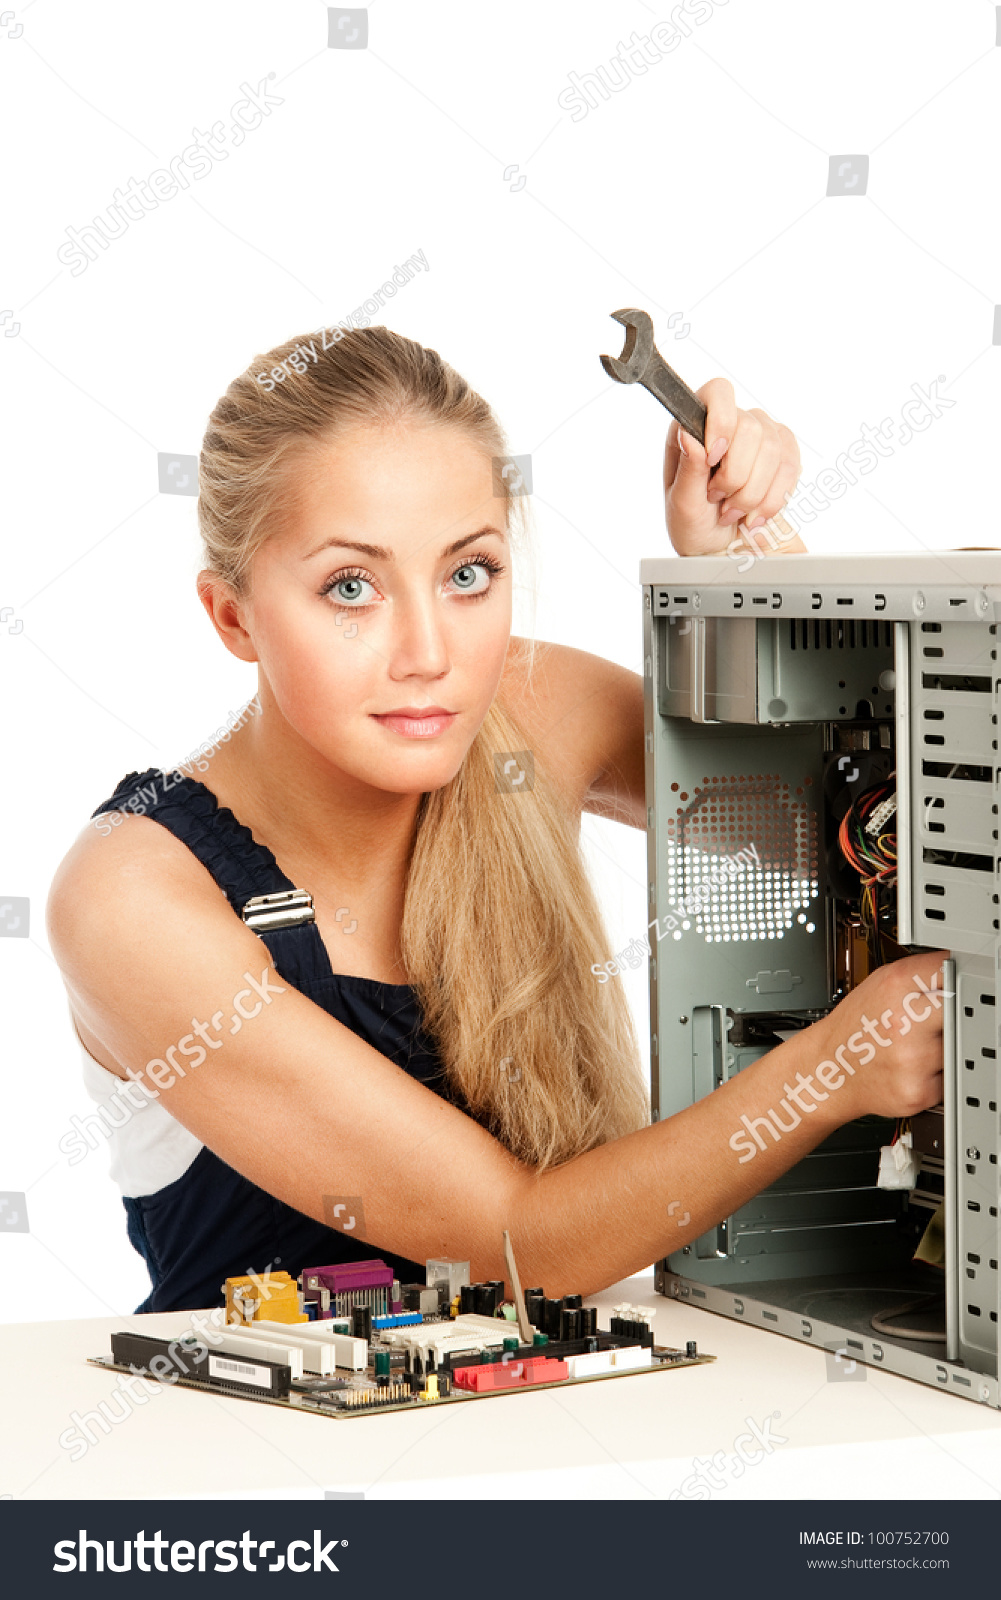 Computer Repair Engineer Blonde Girl Stock Photo Shutterstock